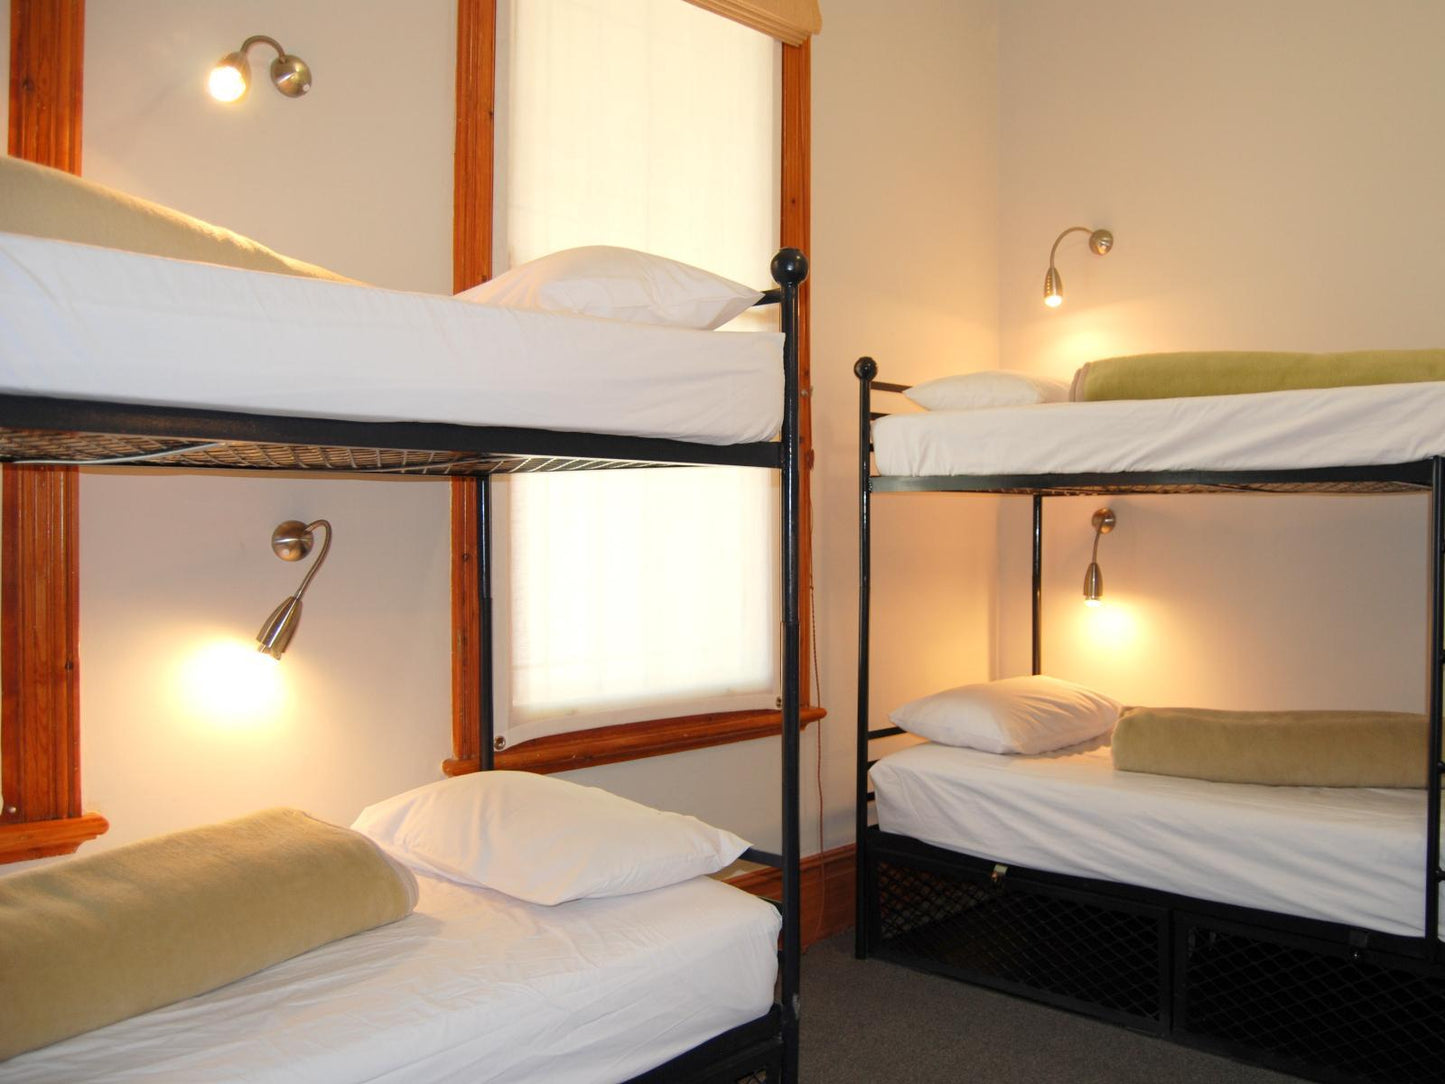 6-Bedded Mixed Dormitory @ Ashanti Lodge Gardens